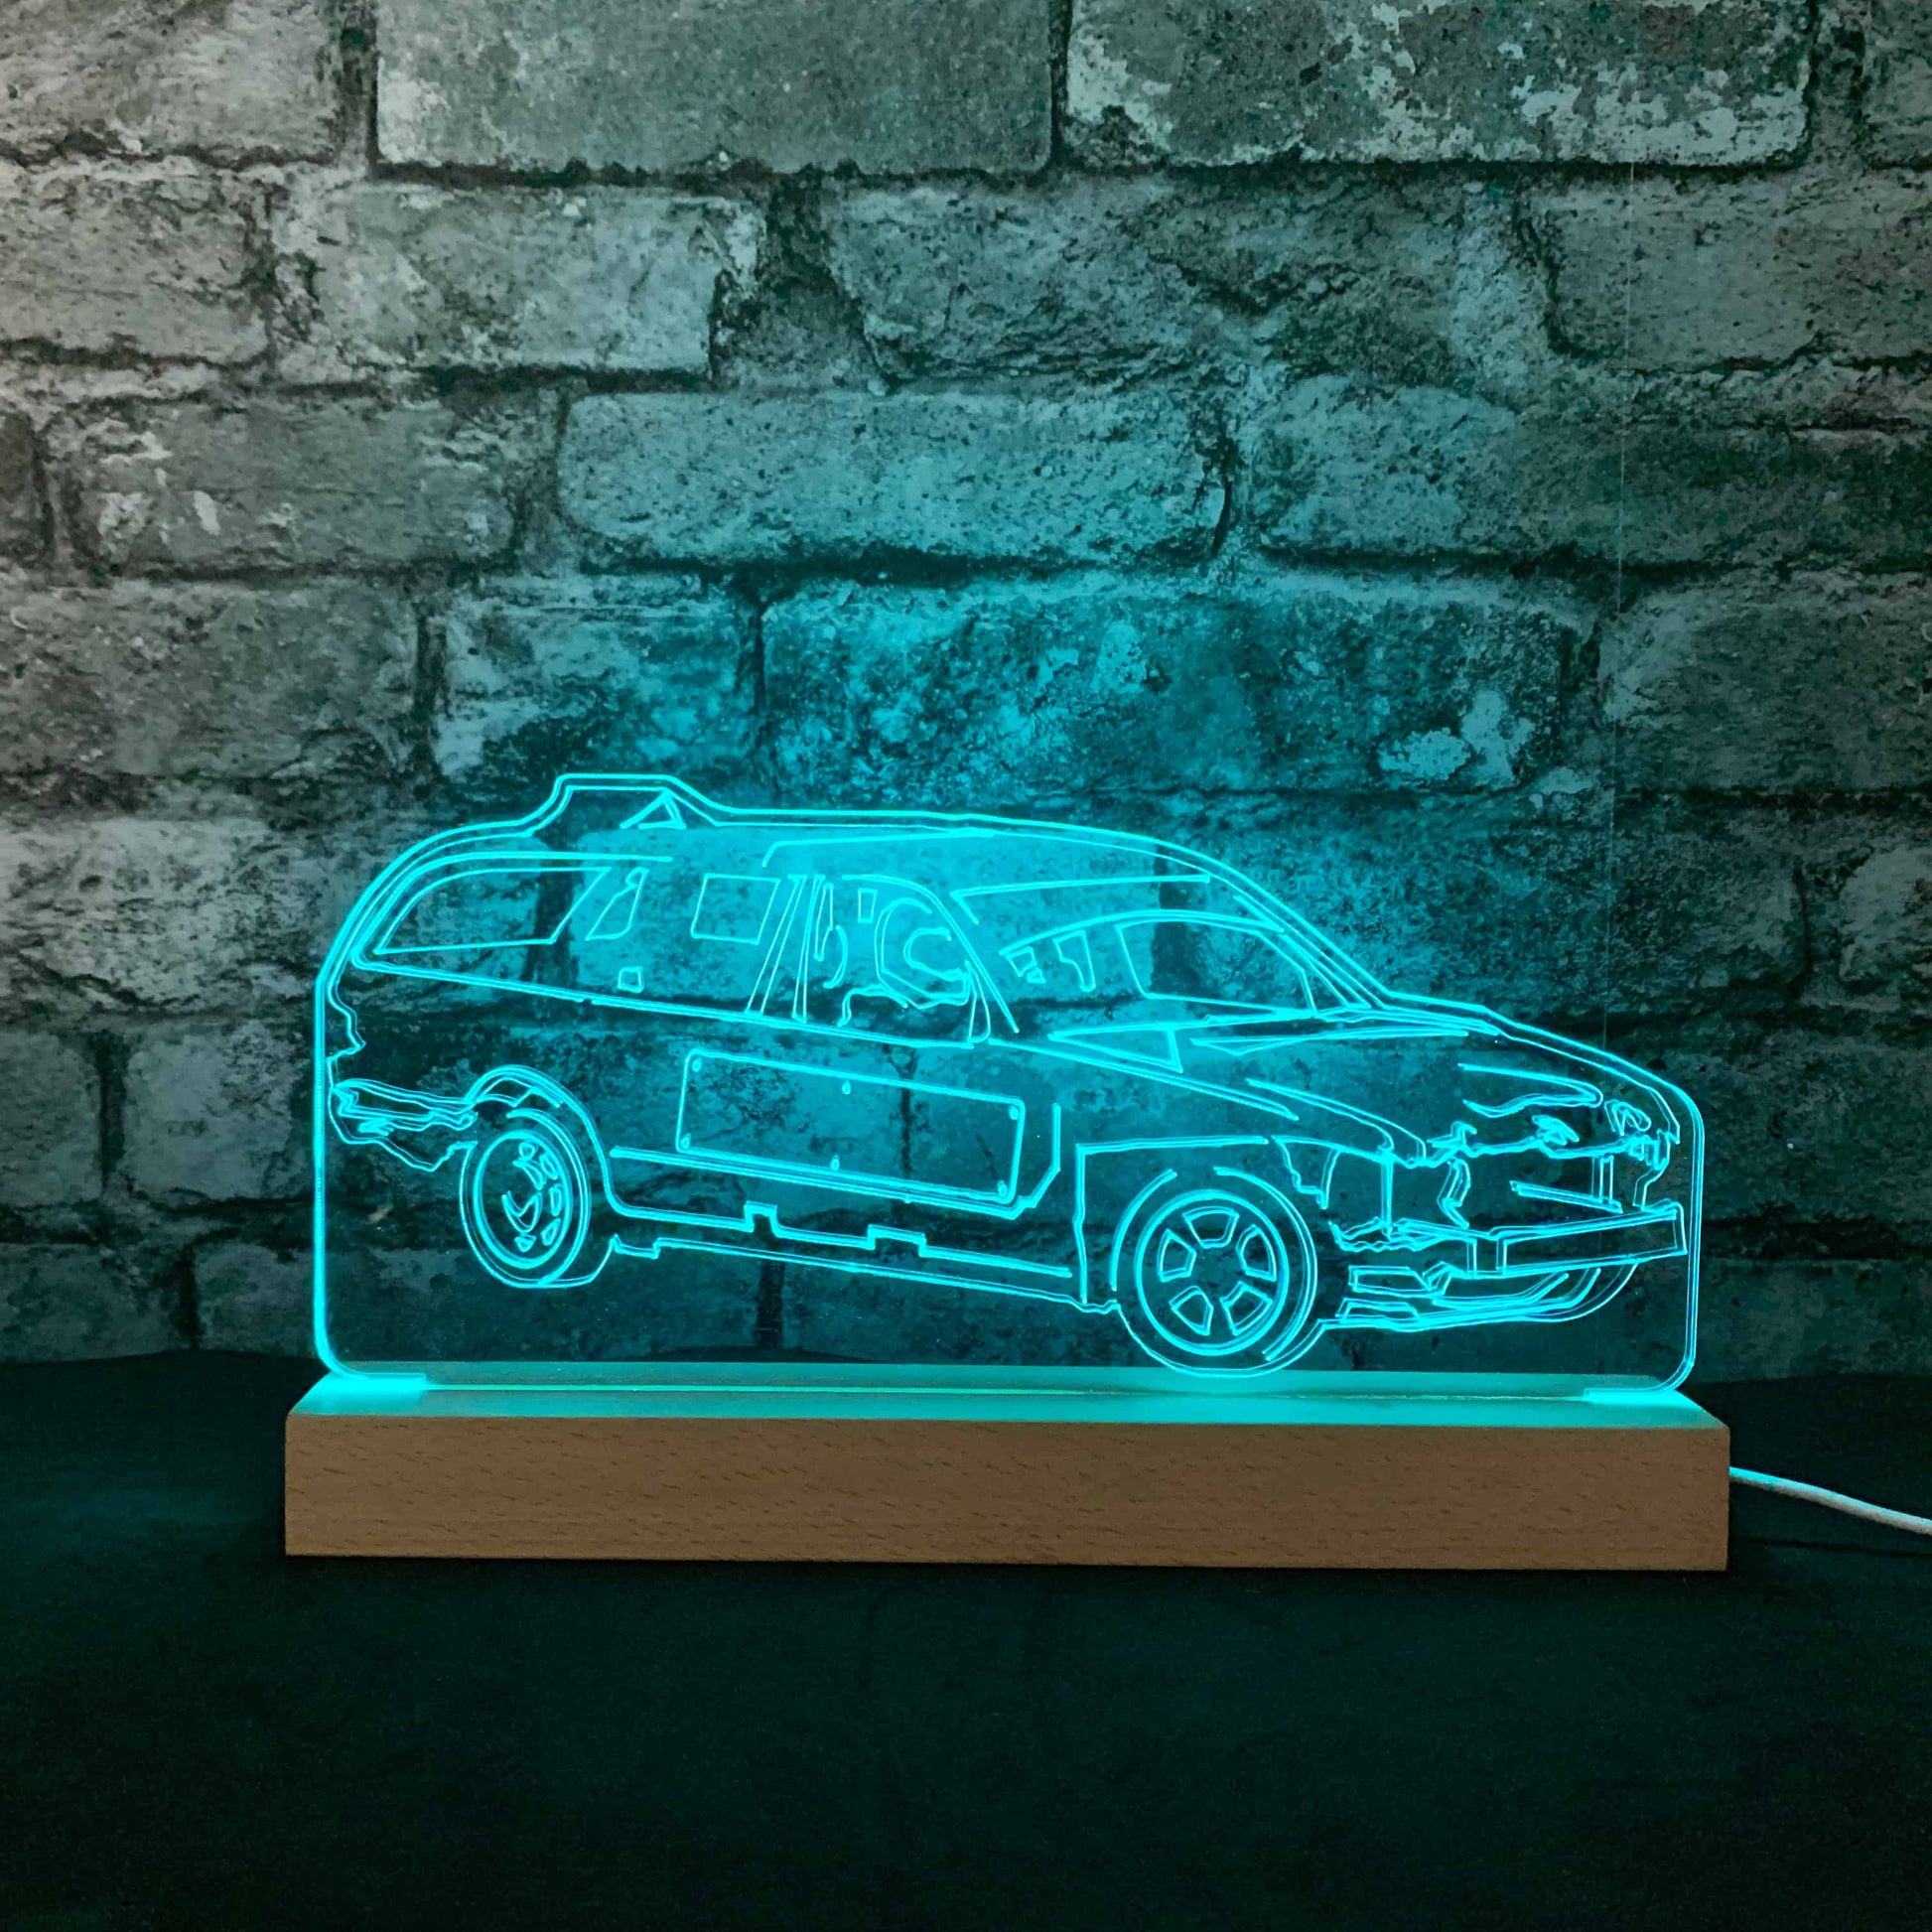 Mercedes Banger Night Light - Large Wooden Base - Night Lights & Ambient Lighting - Stock Car & Banger Toy Tracks